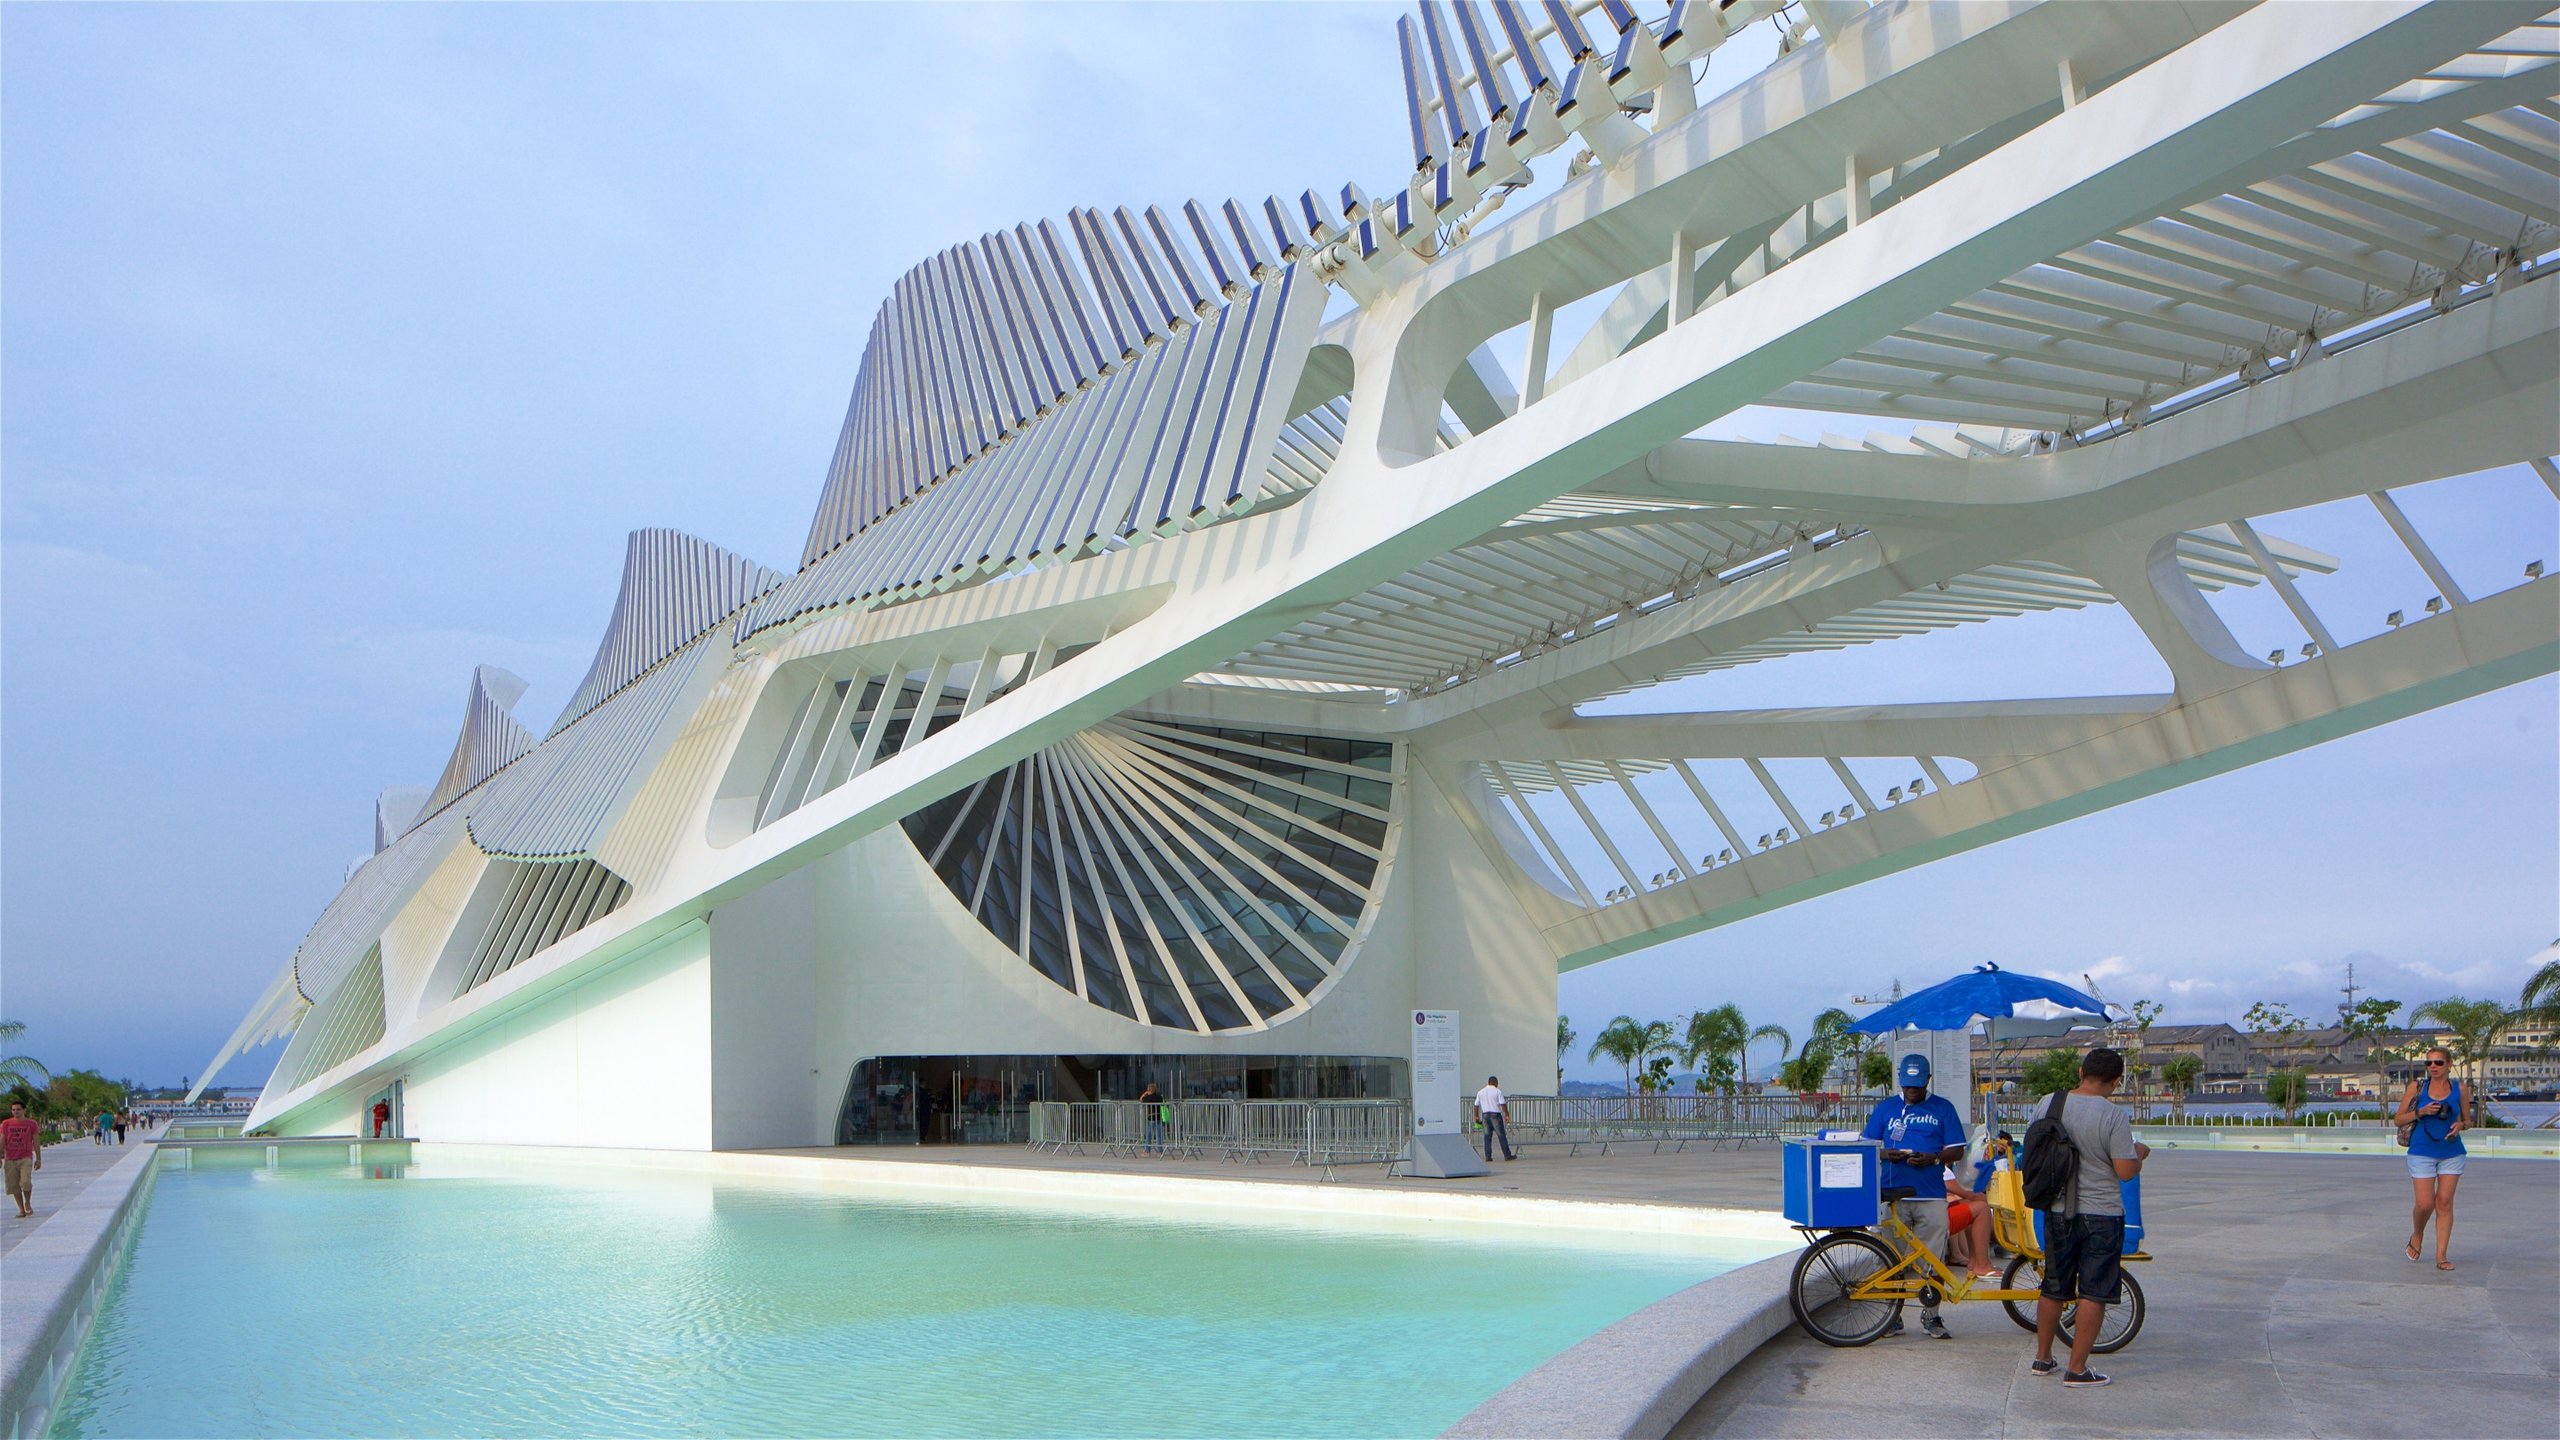 The Museu of Tomorrow in Rio de Janeiro